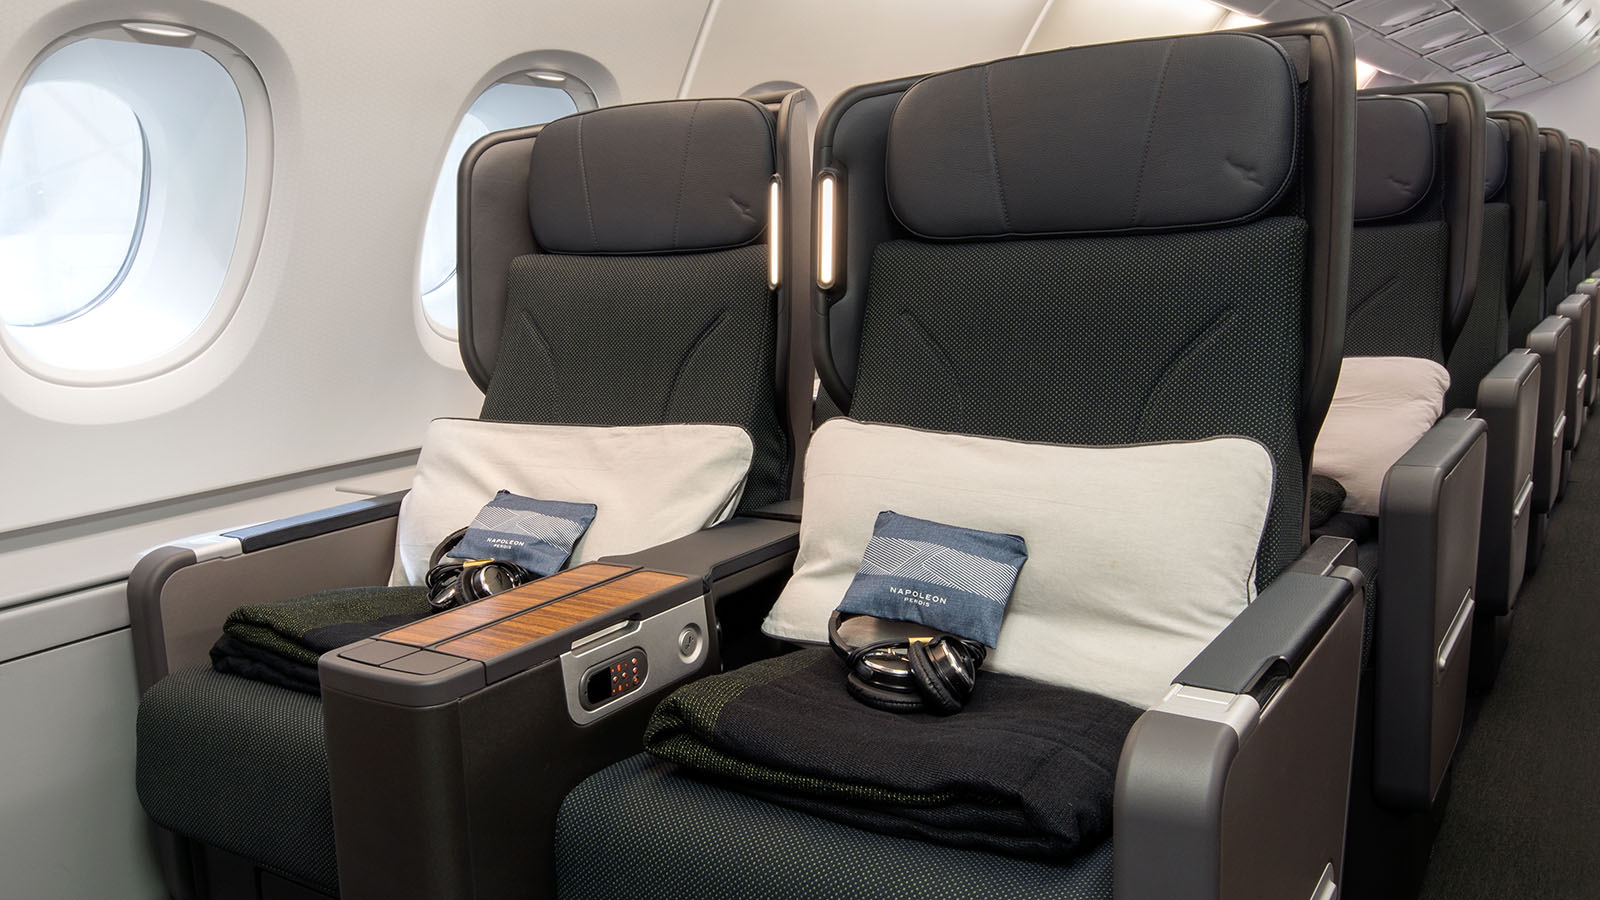 Qantas A380 new Premium Economy seat